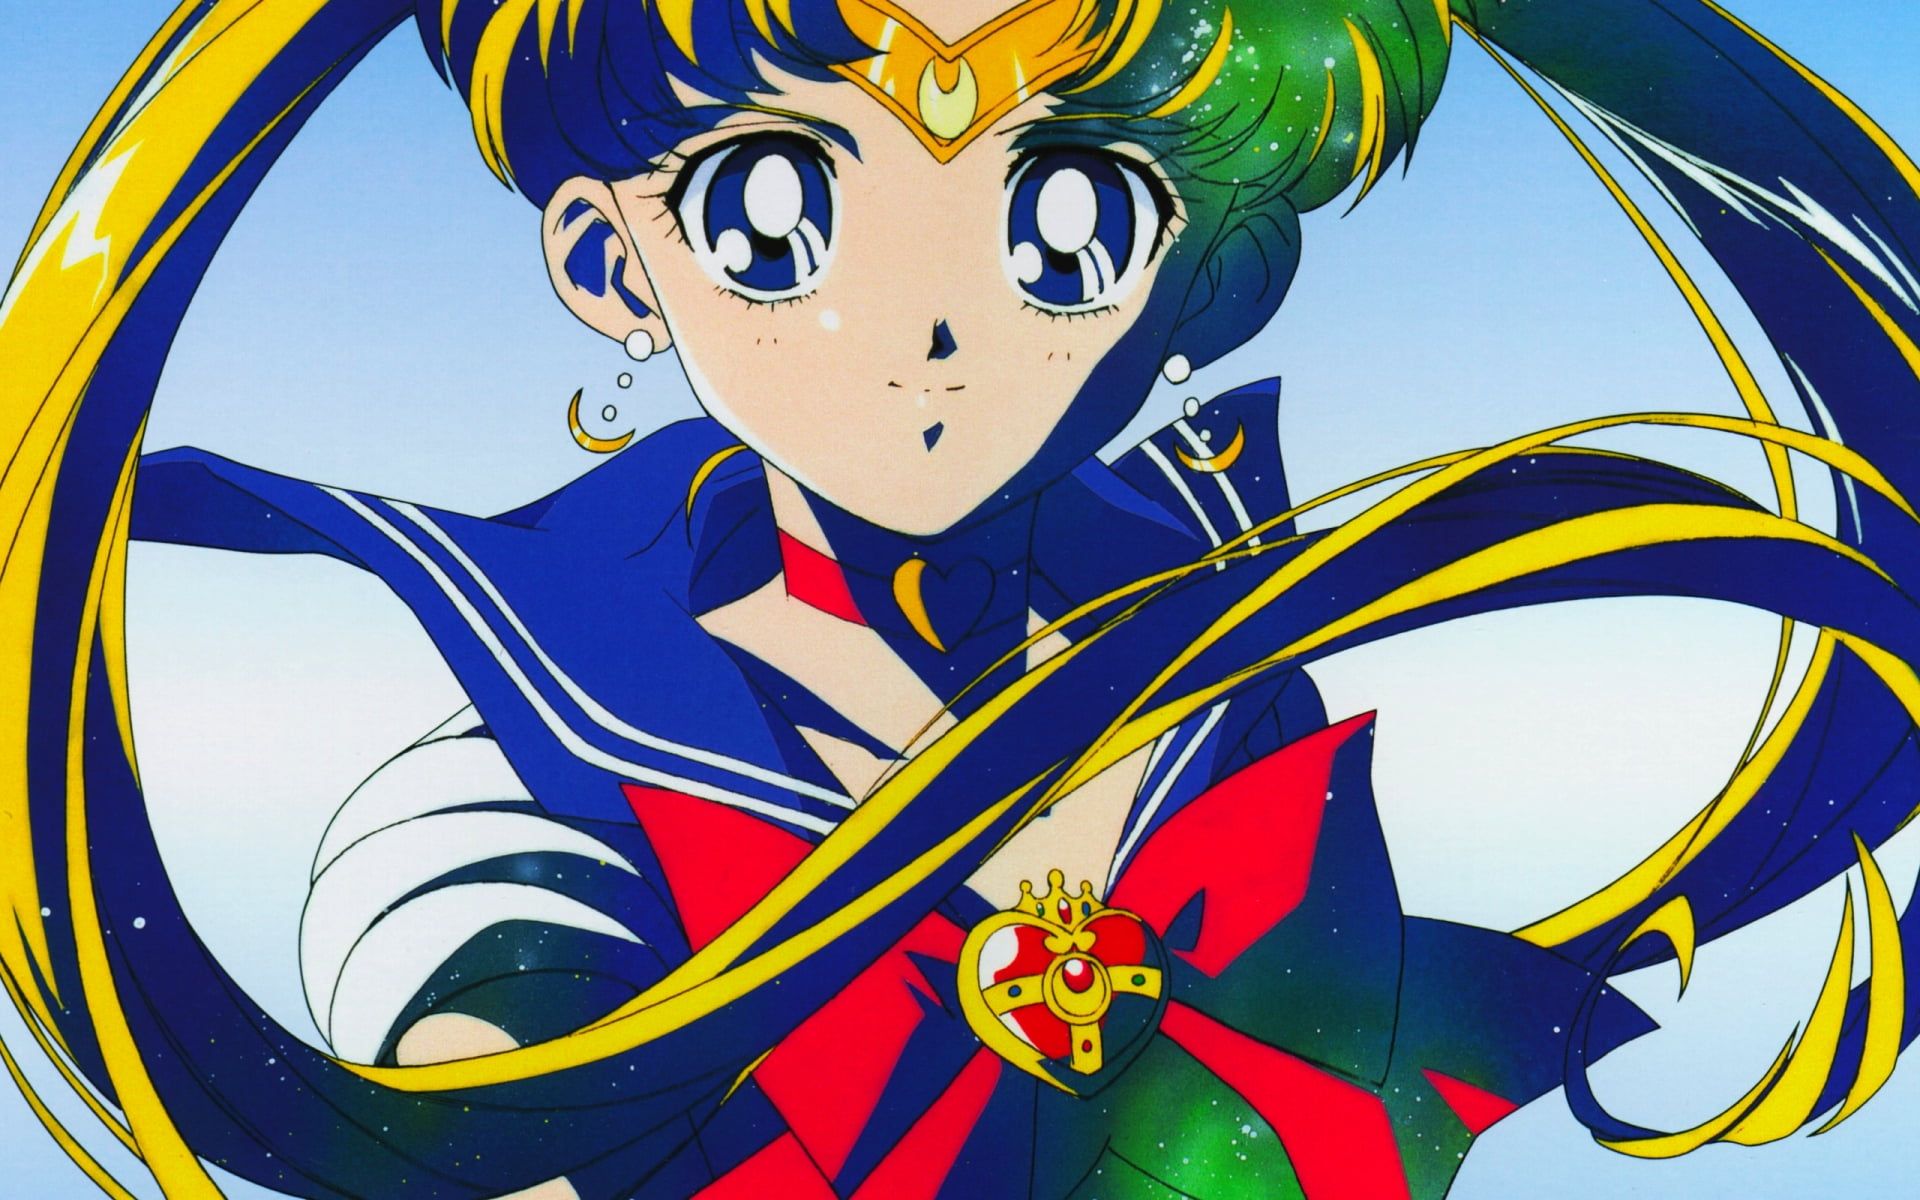 A cartoon character with long hair and blue eyes - Sailor Moon